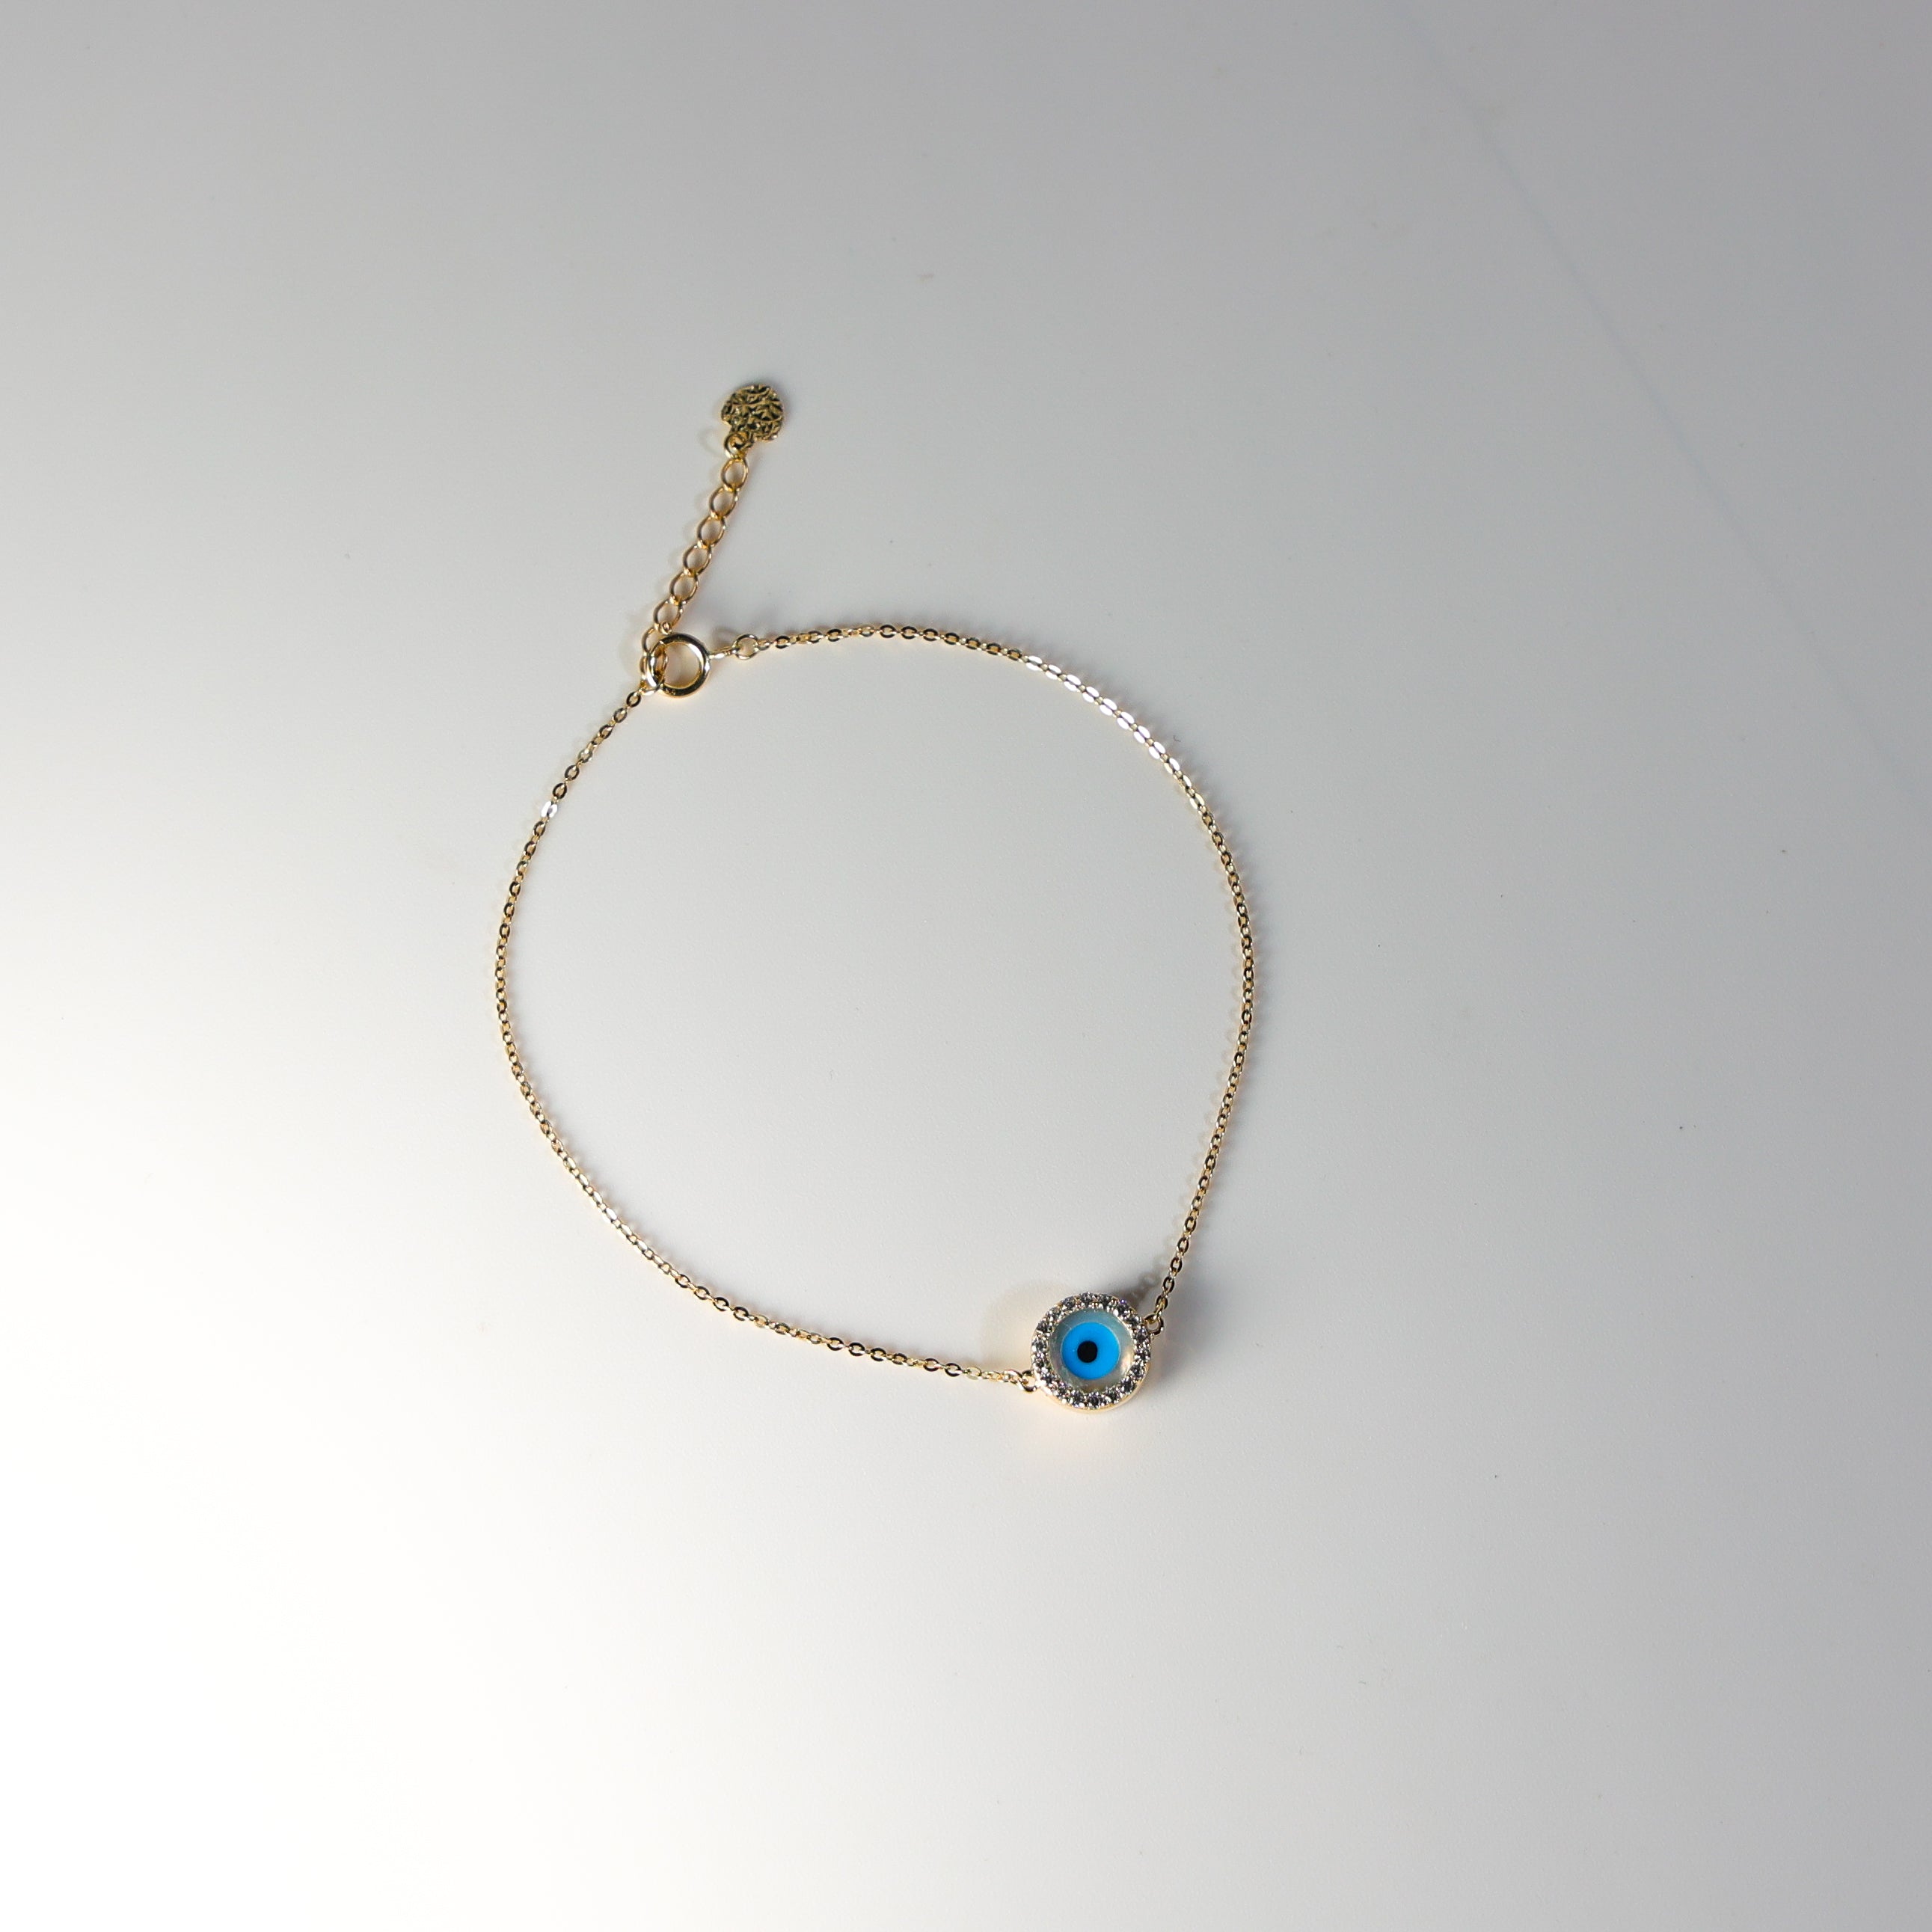 14K Gold Evil Eye Chain Bracelet Model-AB0560 - Charlie & Co. Jewelry